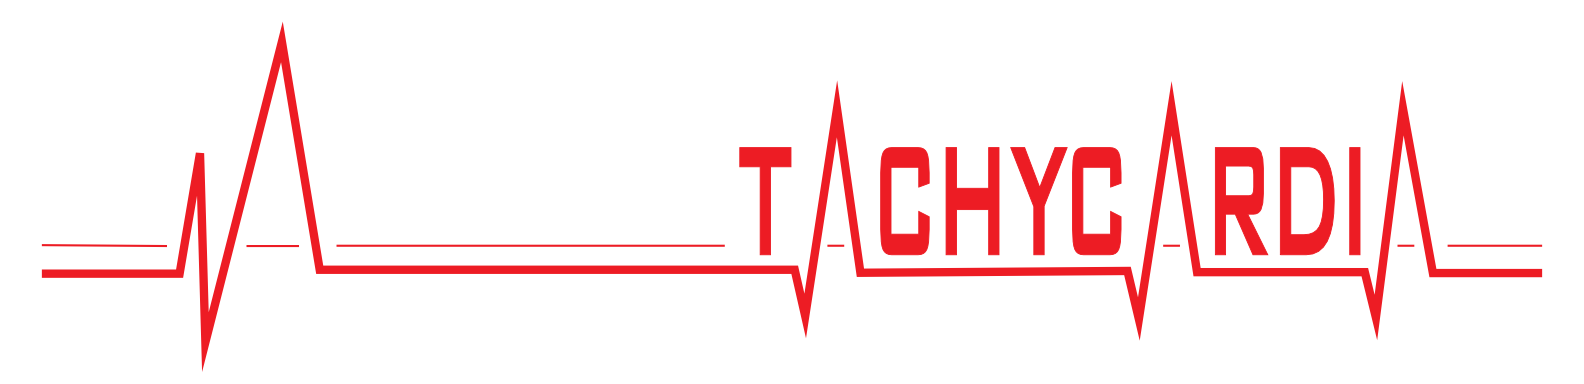 Tachycardia Band-Logo